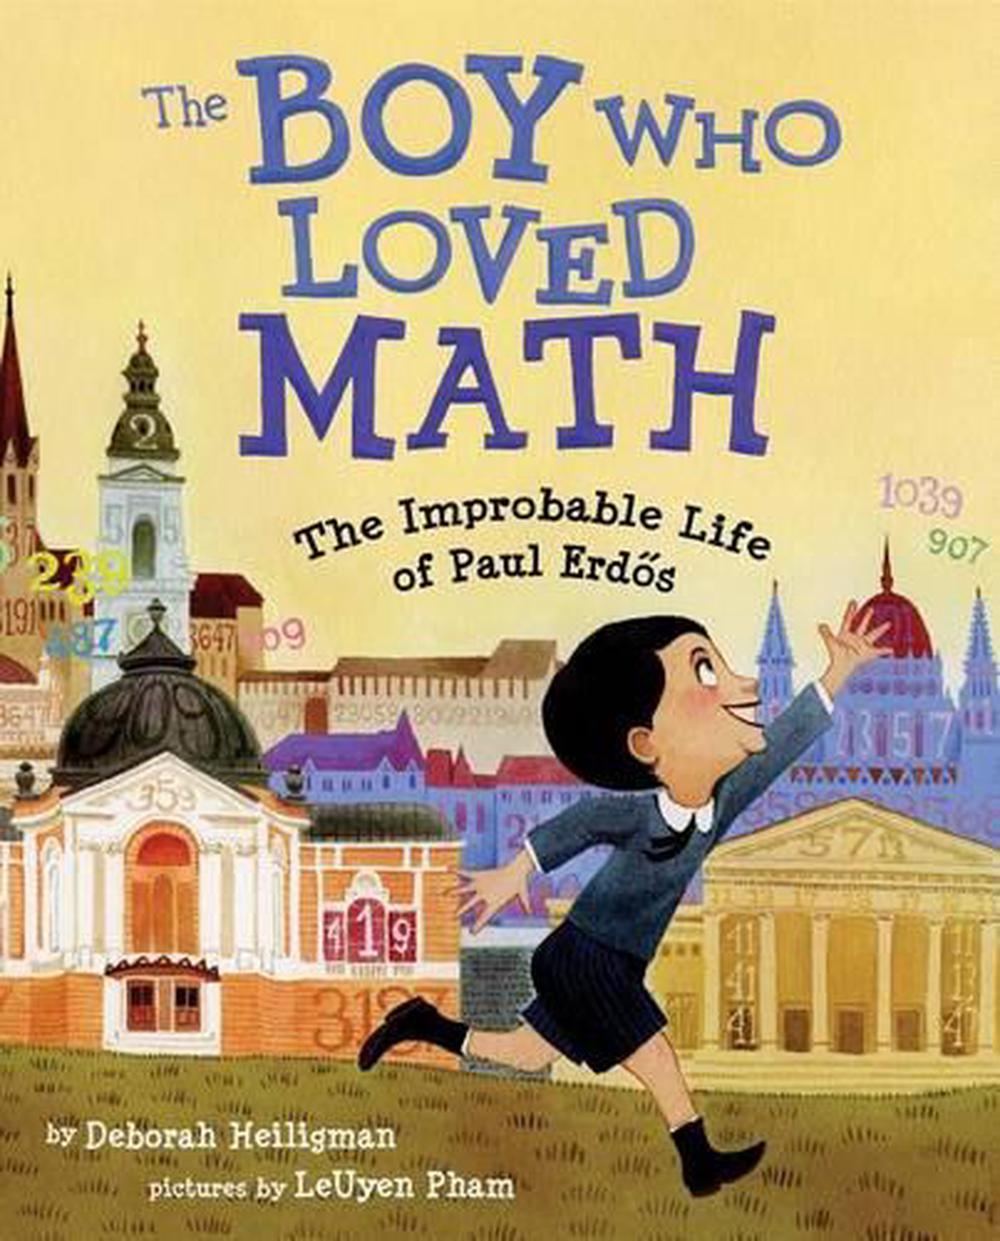 The Boy Who Loved Math by Deborah Heiligman